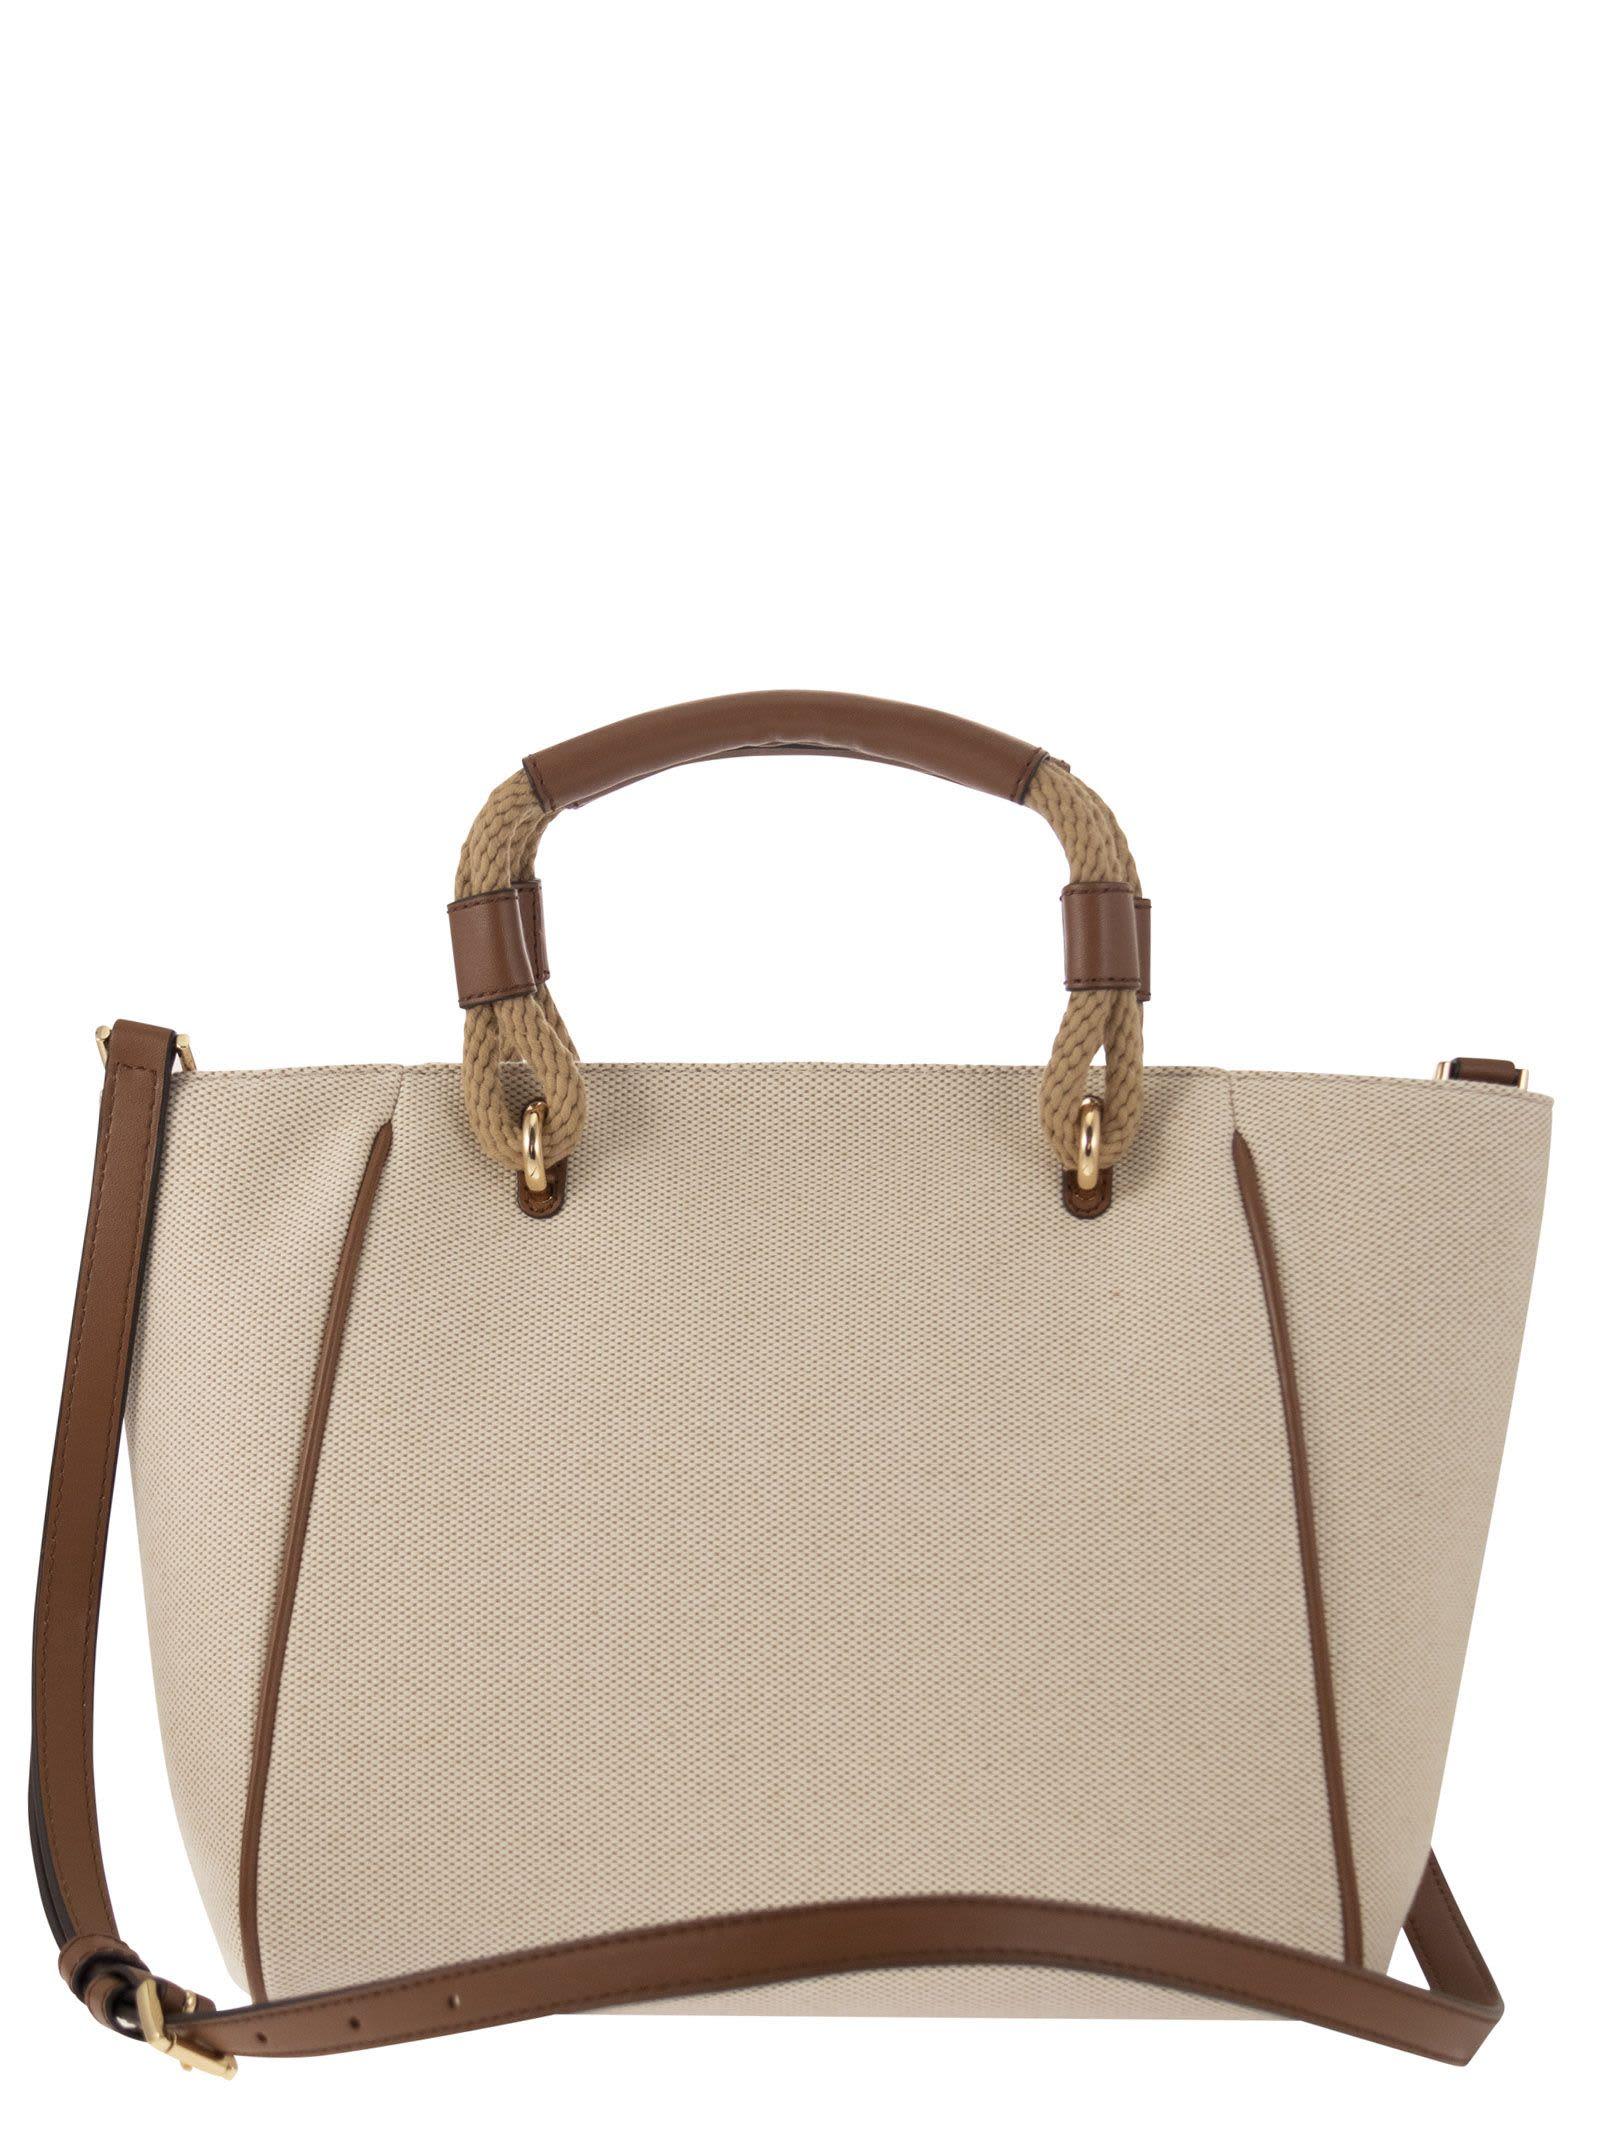 Michael Kors Talia - Fabric Handbag in Brown | Lyst